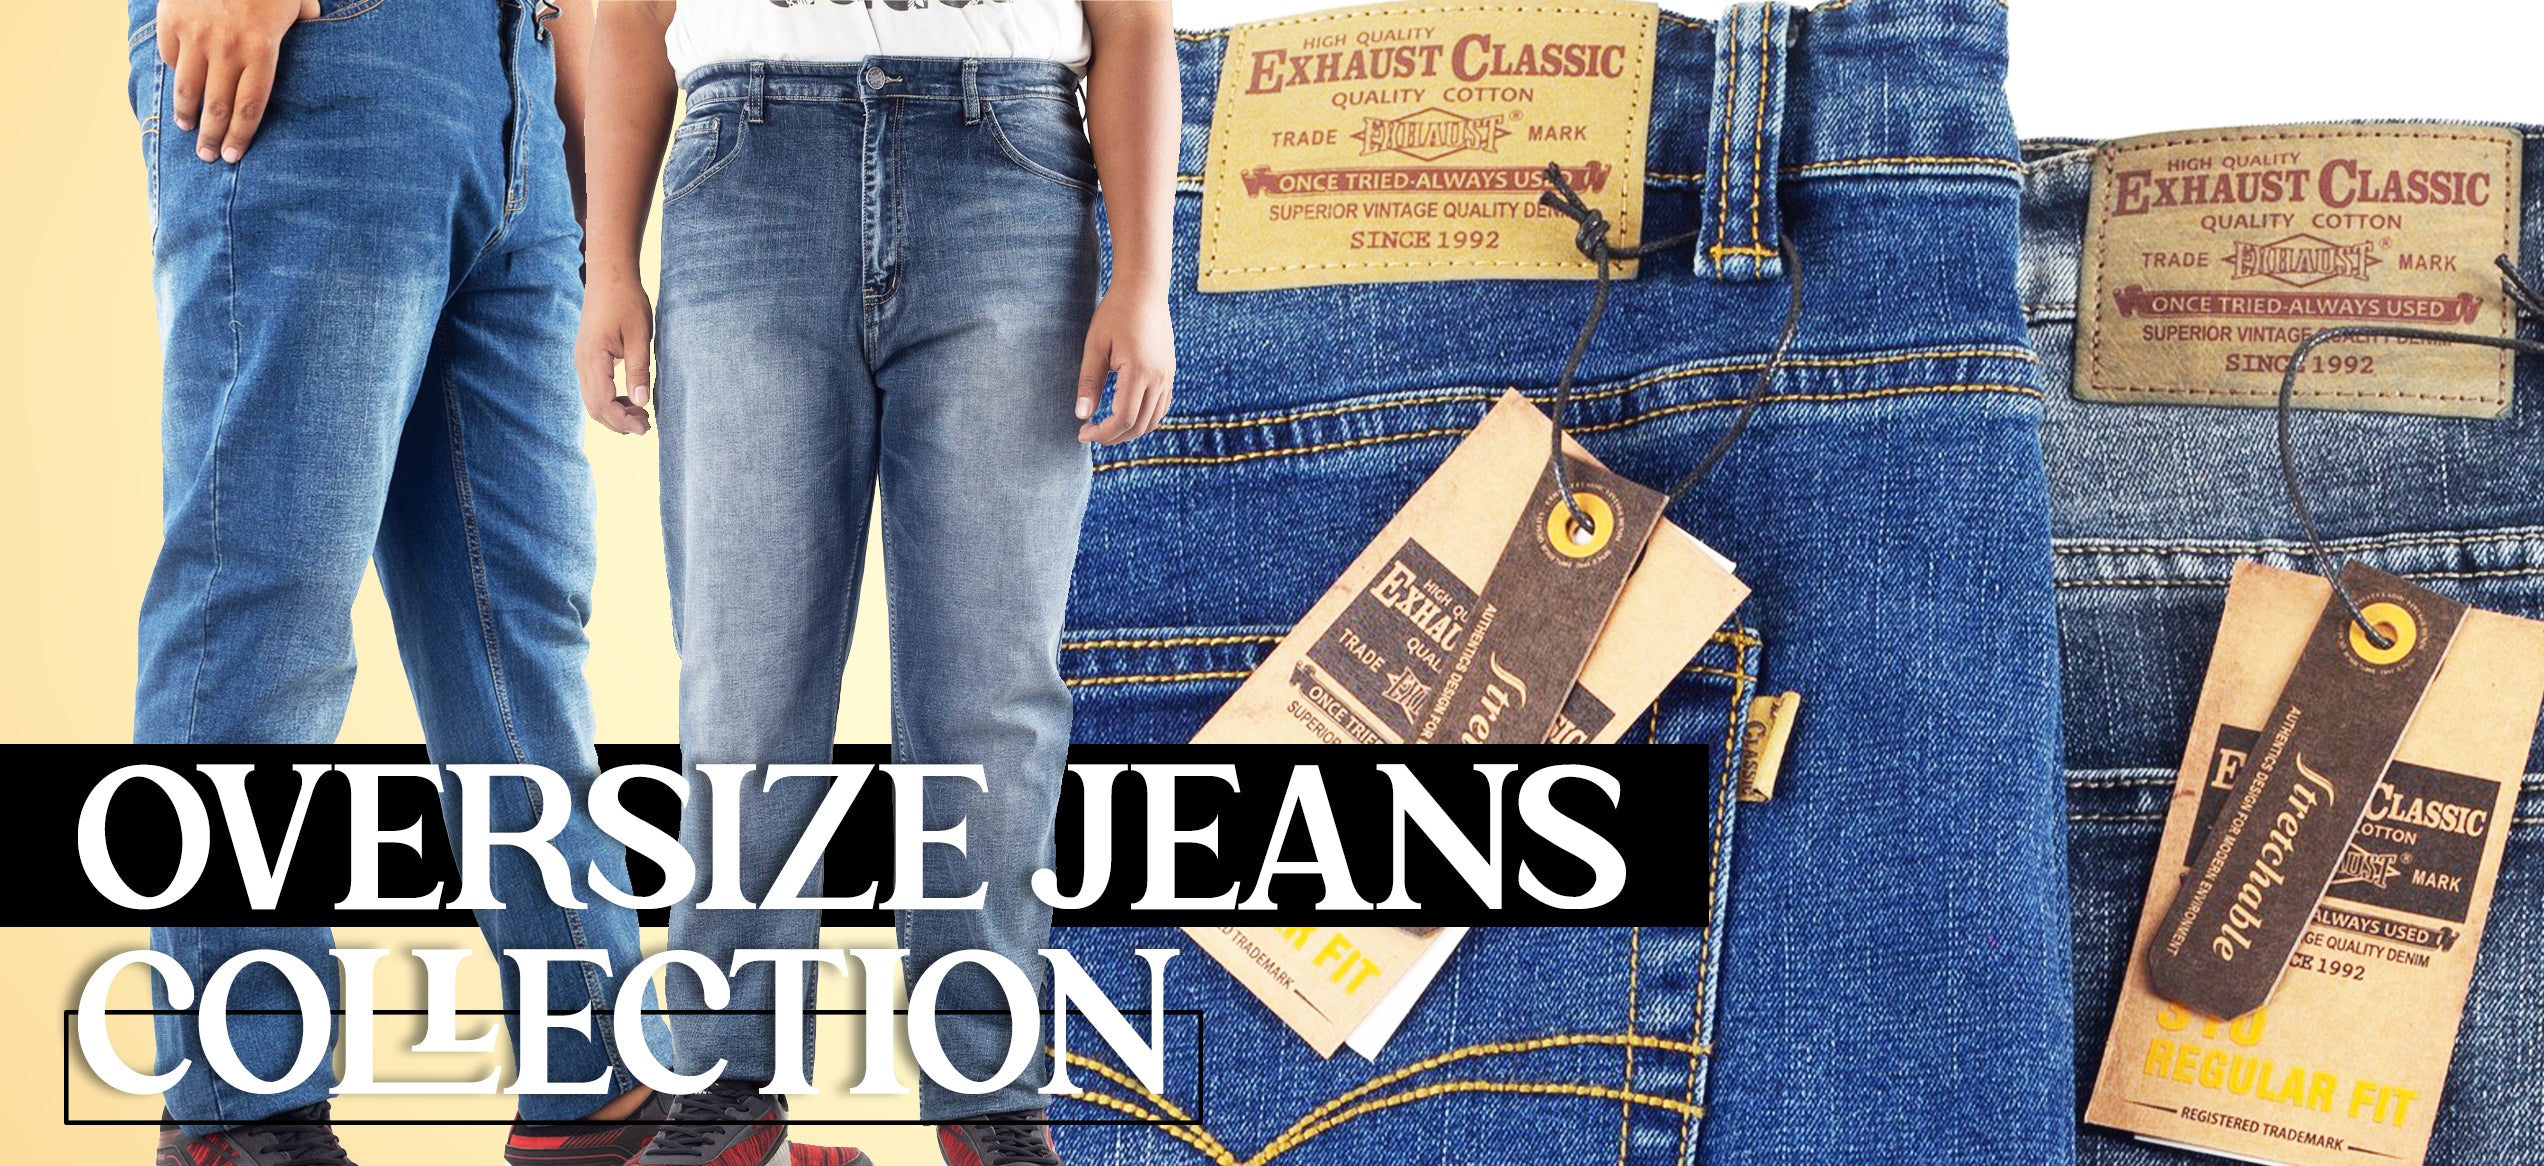 310 Oversize Jeans